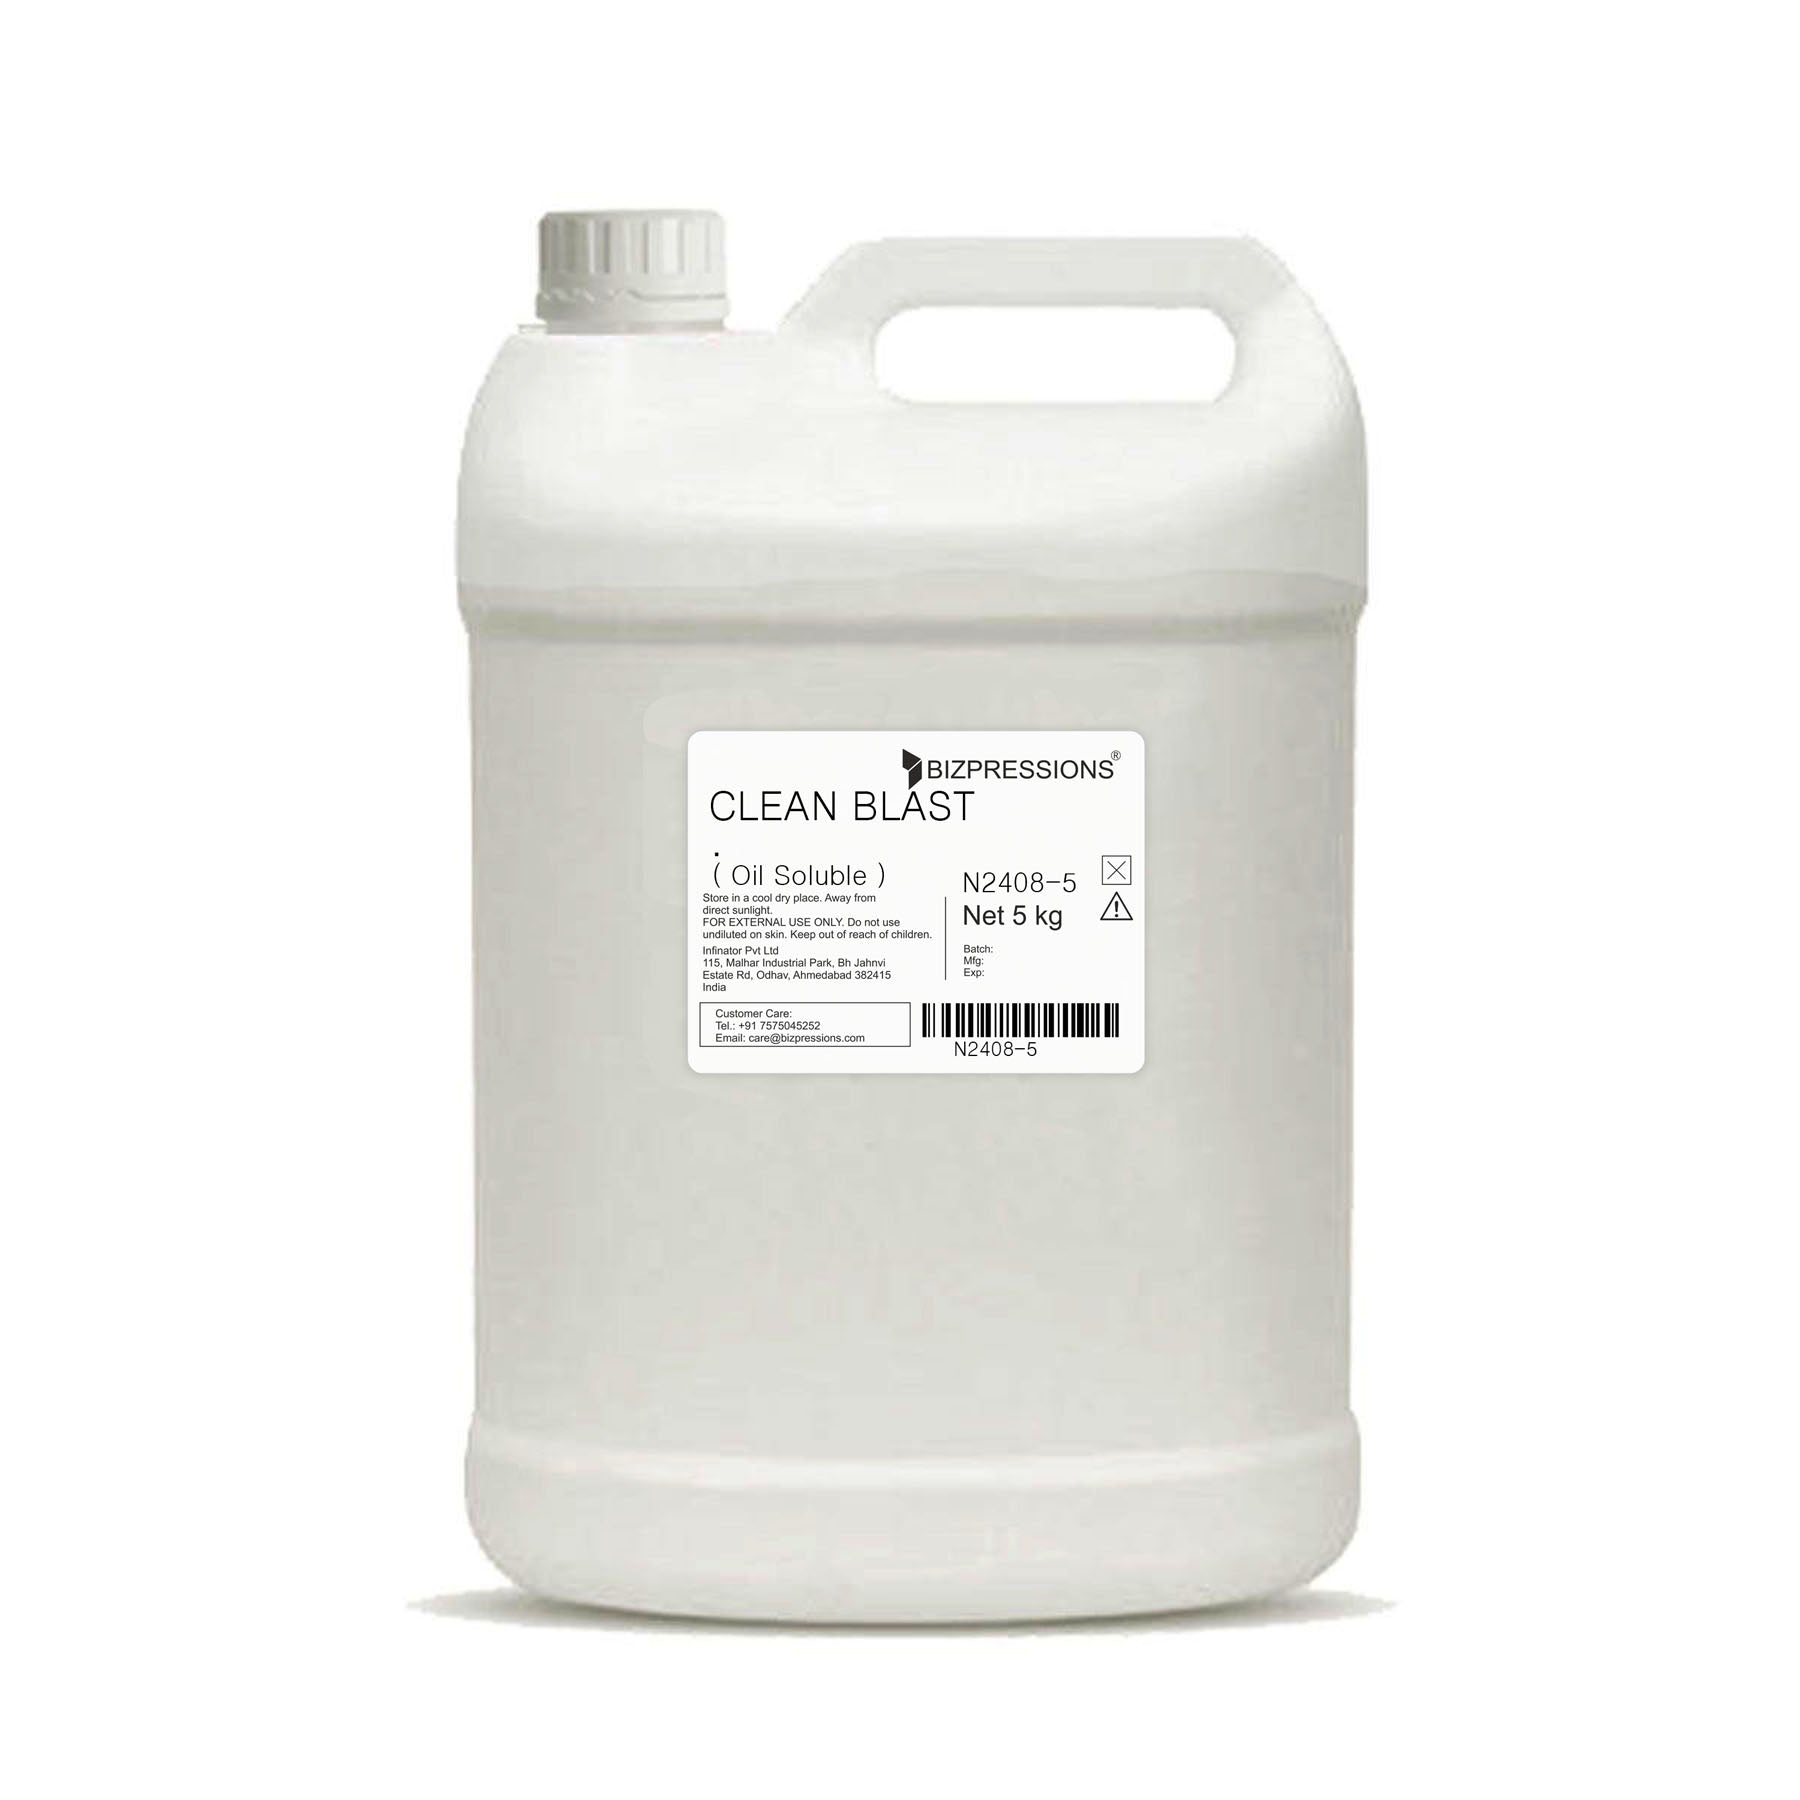 CLEAN BLAST - Fragrance ( Oil Soluble ) - 5 kg